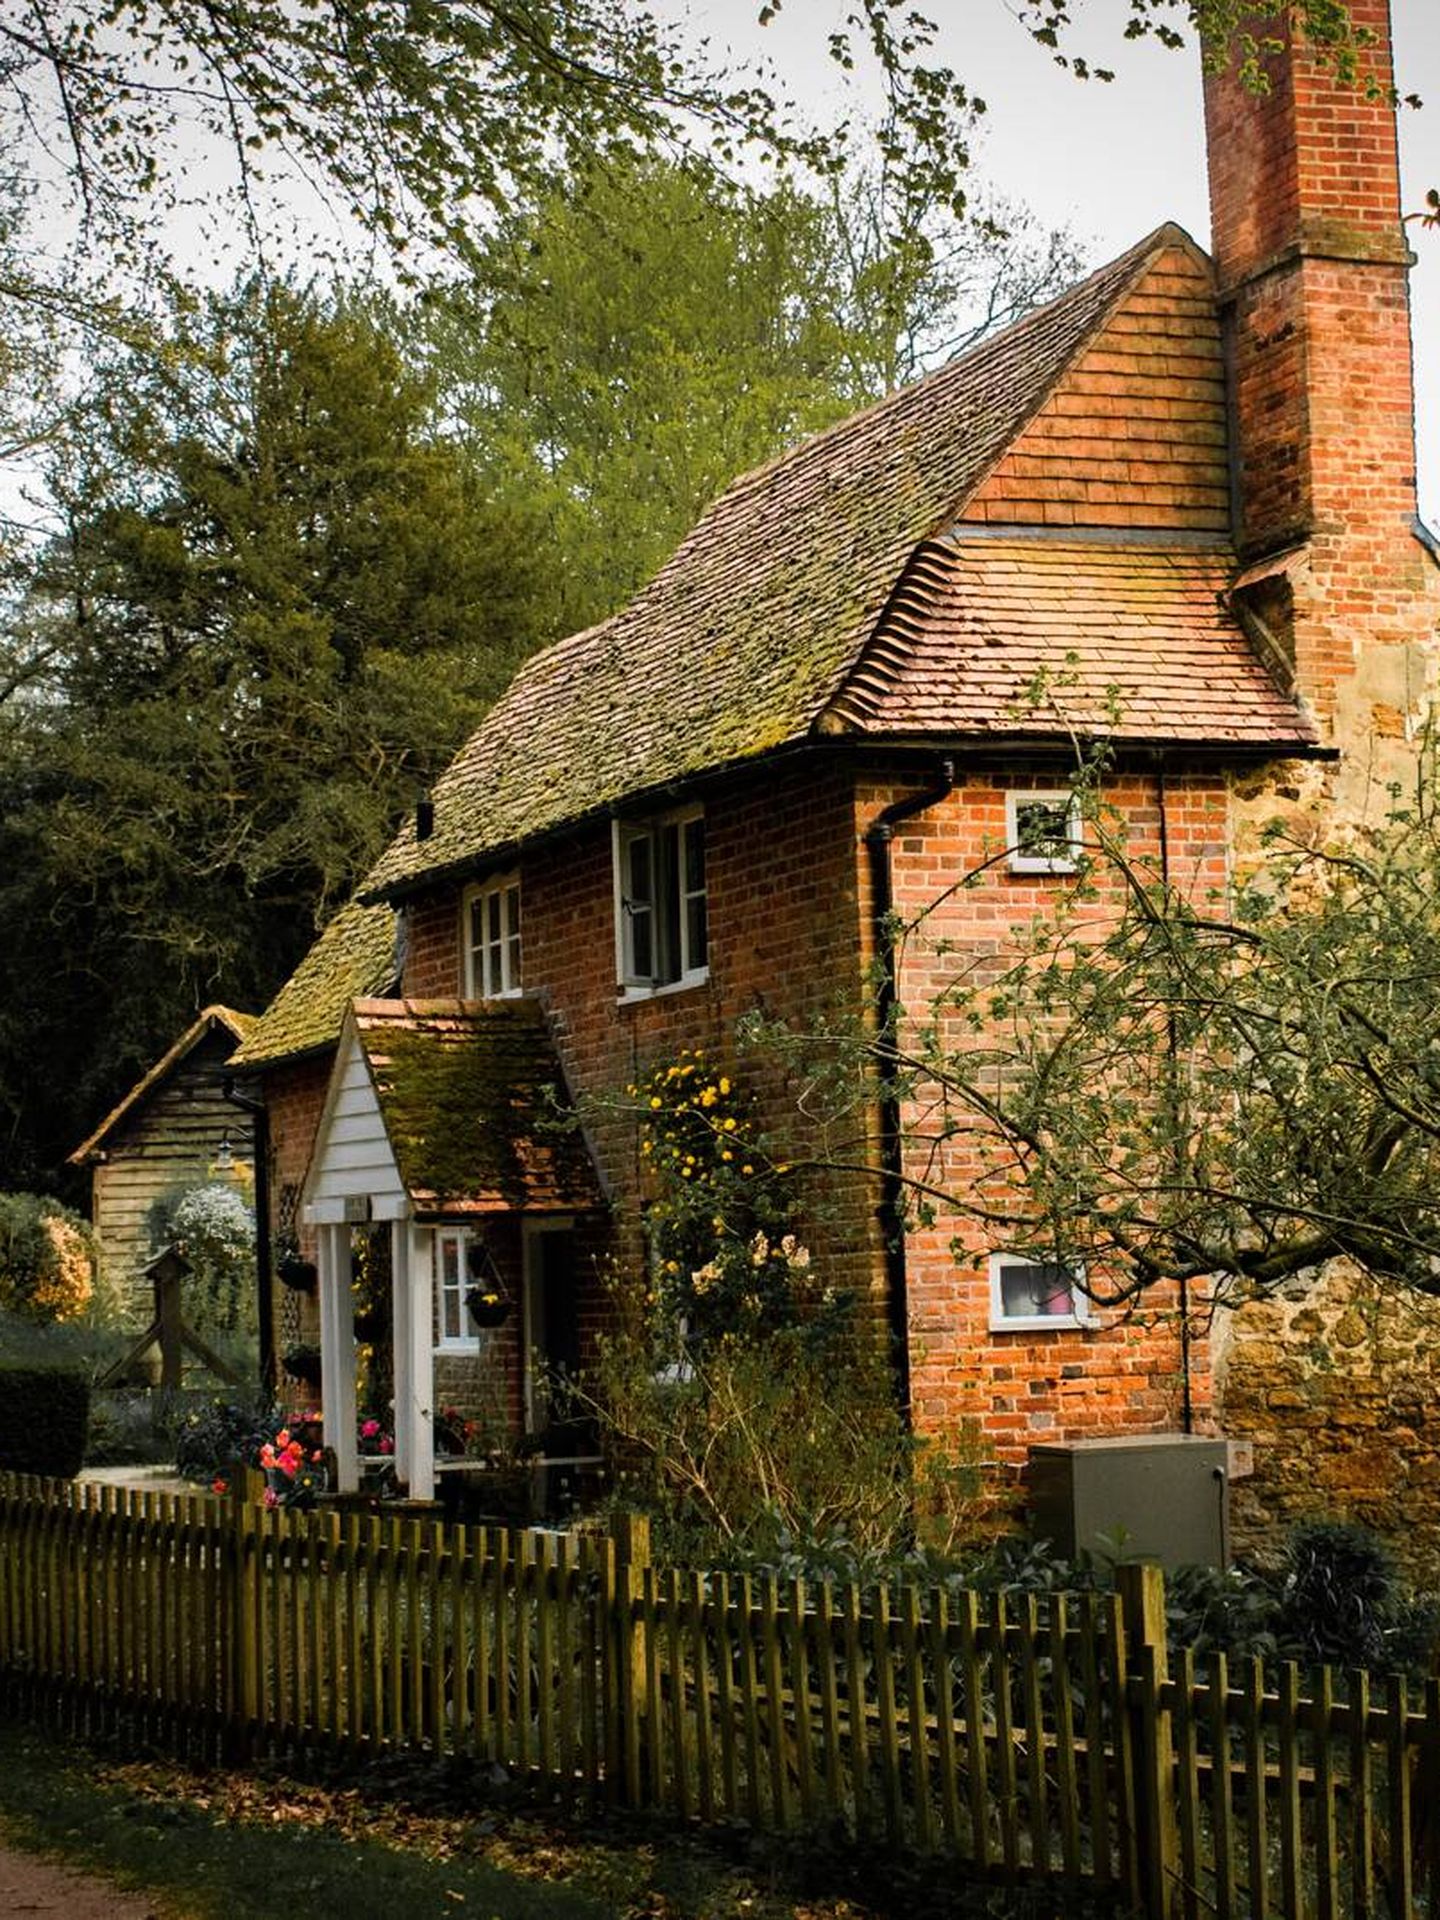 Típico cottage inglés. (Simon Sikorski)